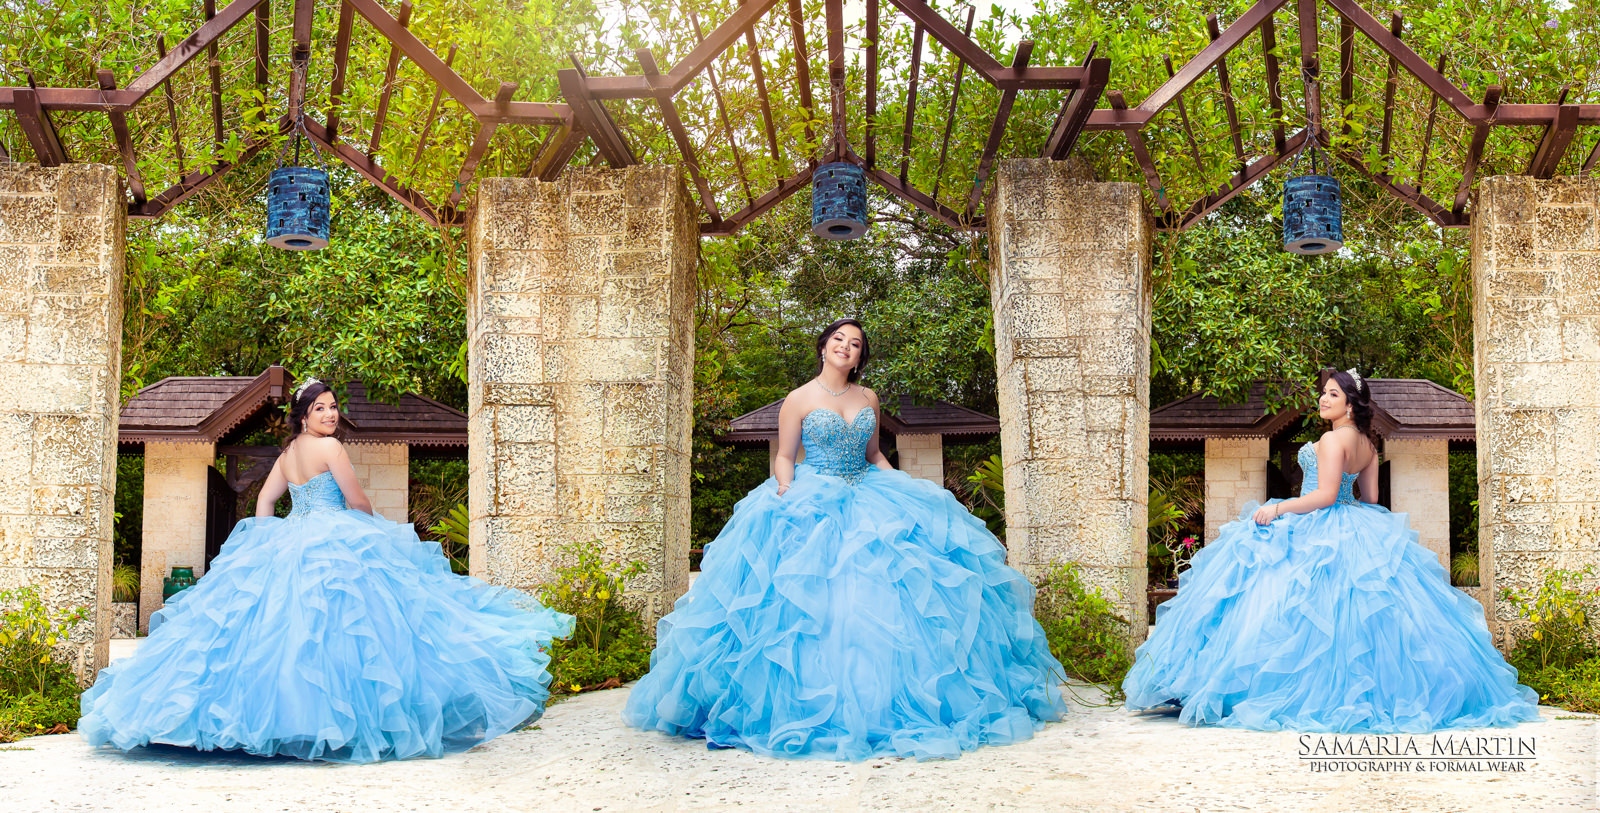 Miami Dress Rental, Morilee dresses, blue quinceañera dresses, quinceañera dresses near me, best Miami photographer 2